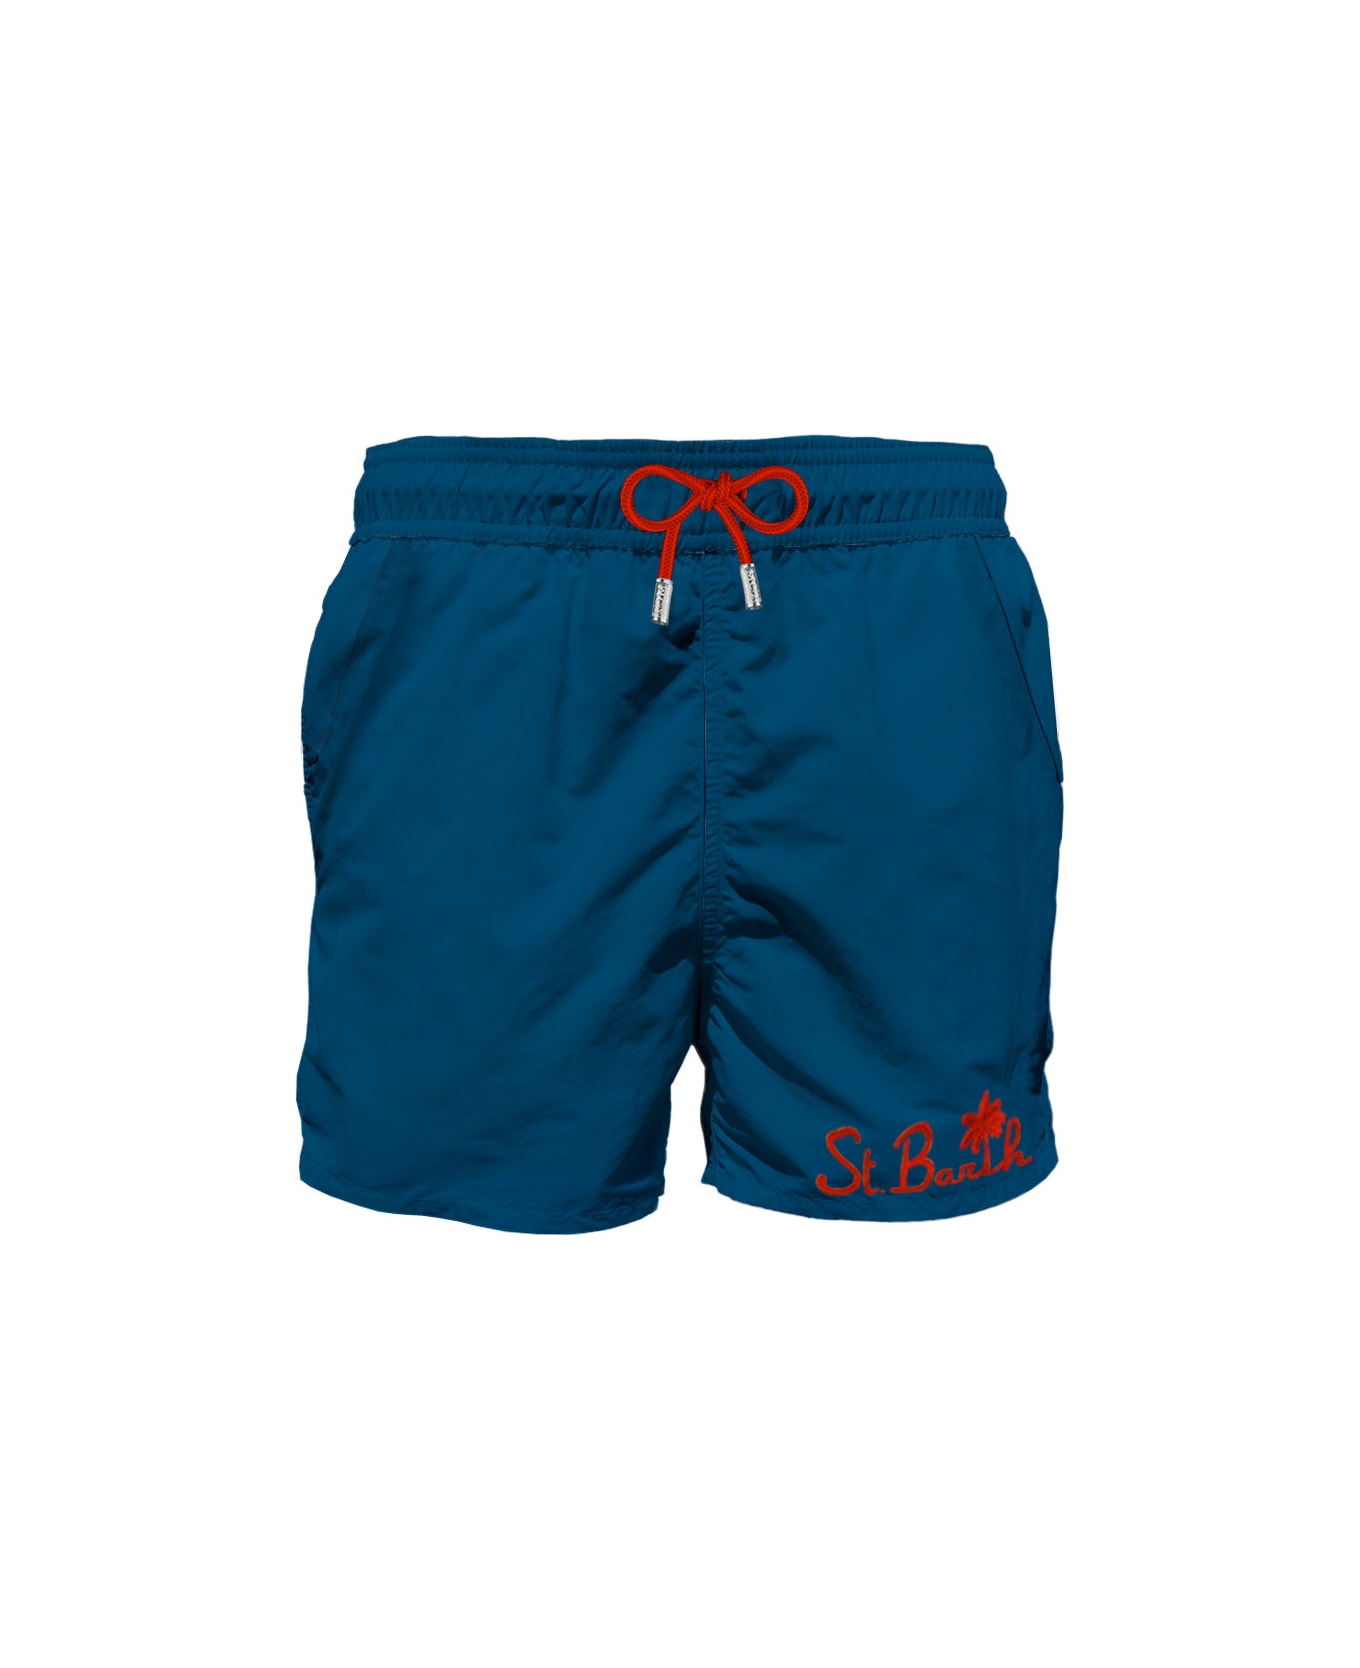 MC2 Saint Barth Blue Man Swim Shorts With Pocket - BLUE スイムトランクス